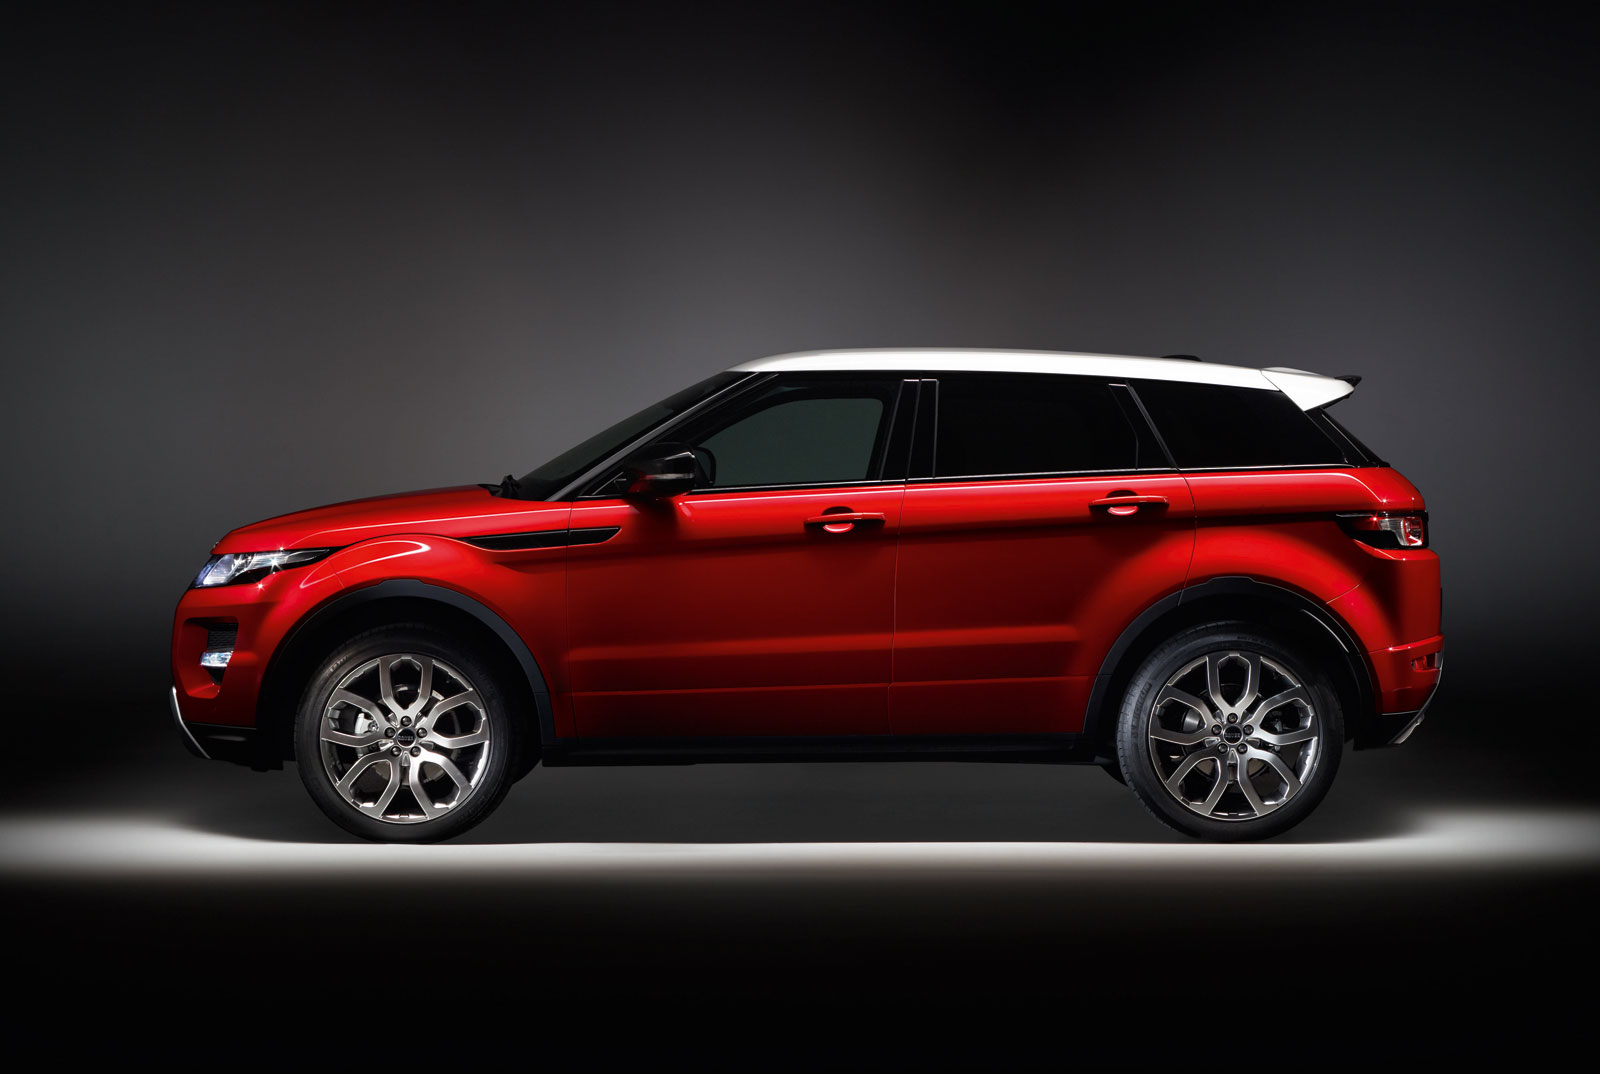 Kendall self drive: 2012 Land Rover Range Rover Evoque 5 Door Review